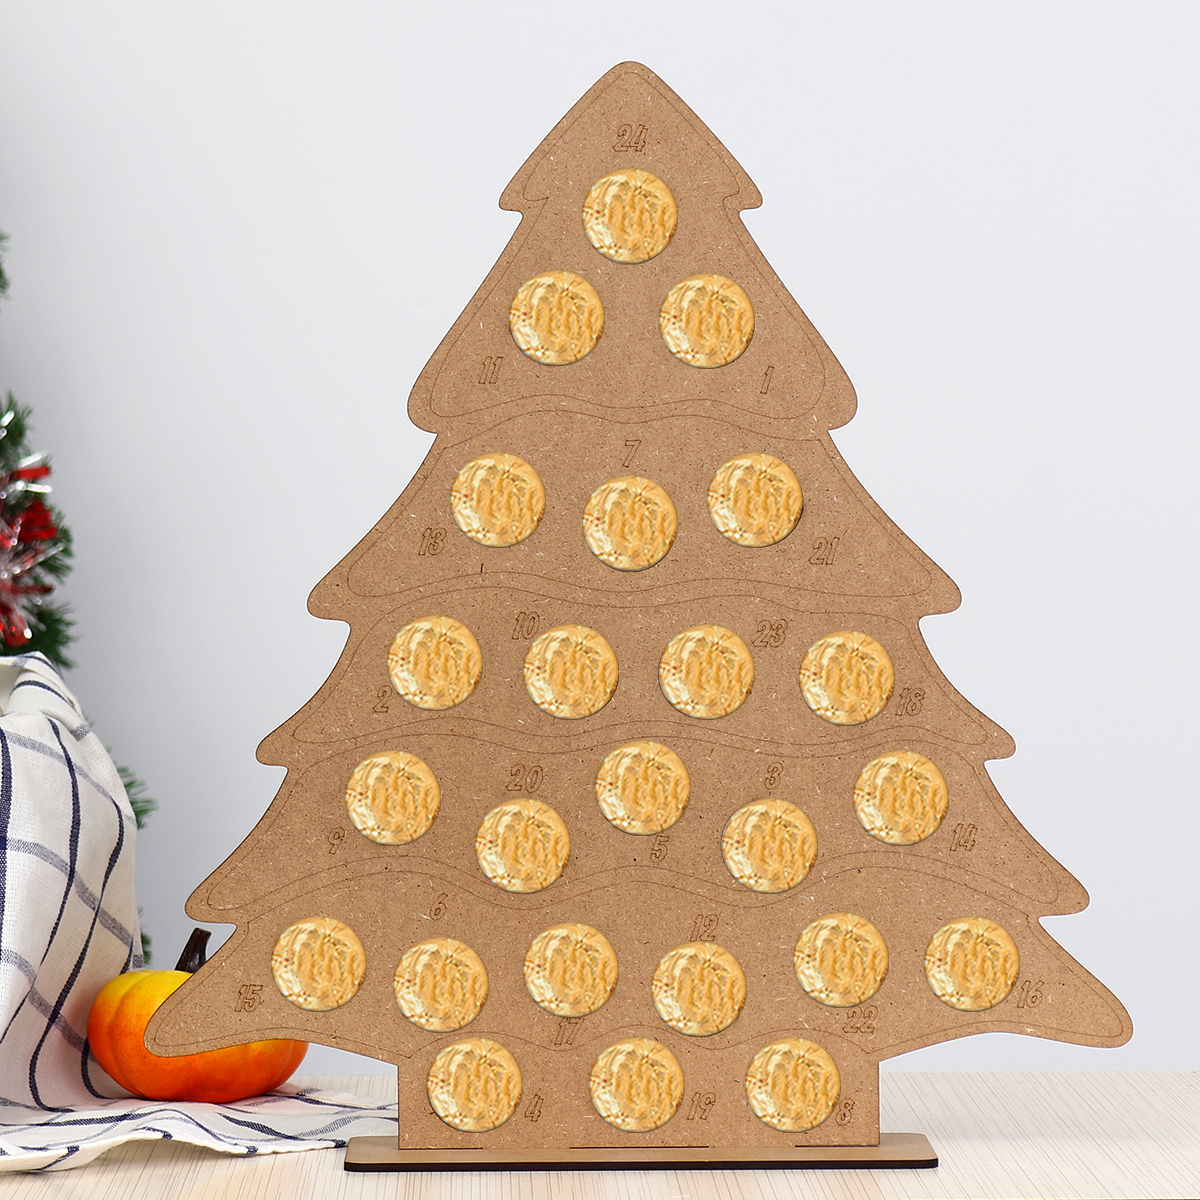 MDF-Wooden-Christmas-Advent-Calendar-Christmas-Tree-Decoration-Fits-24-Circular-Chocolates-Candy-Sta-1587877-2